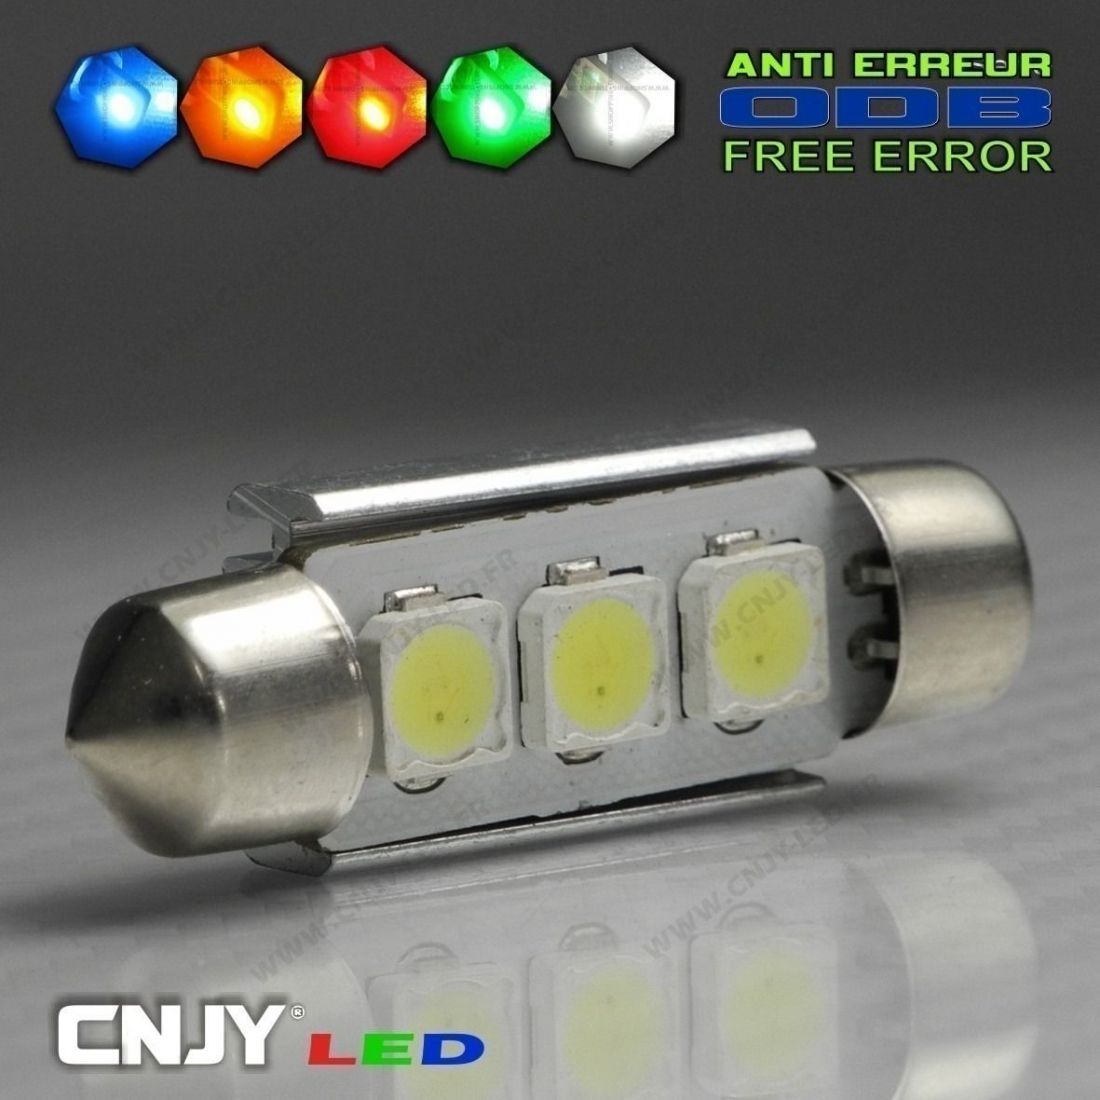 C5W LED 36 mm – haut de gamme – Canbus – LED LIGHTING